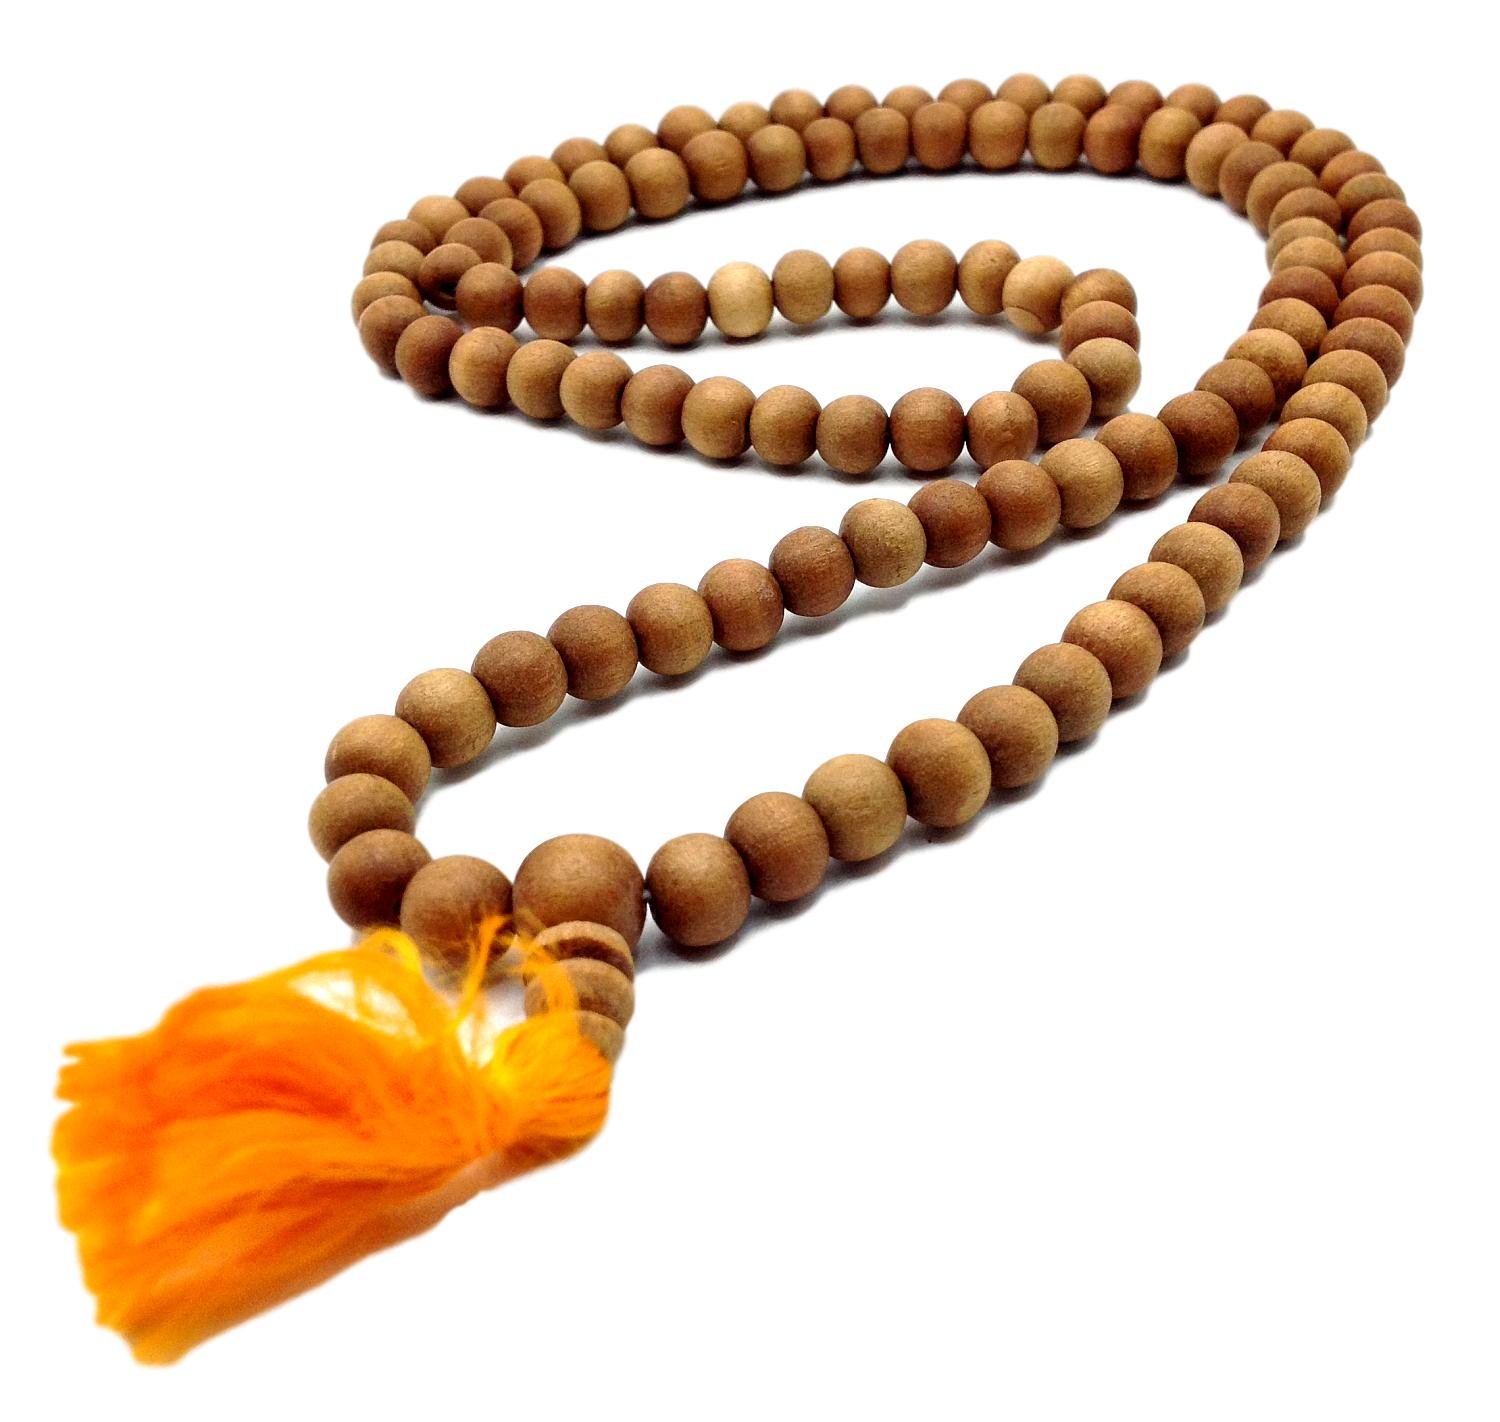 Healing Lama Trademarked 108 Beads Genuine Sandlewood Tibetan Meditation Prayer Japa Mala, Necklace. 8MM Beads Size